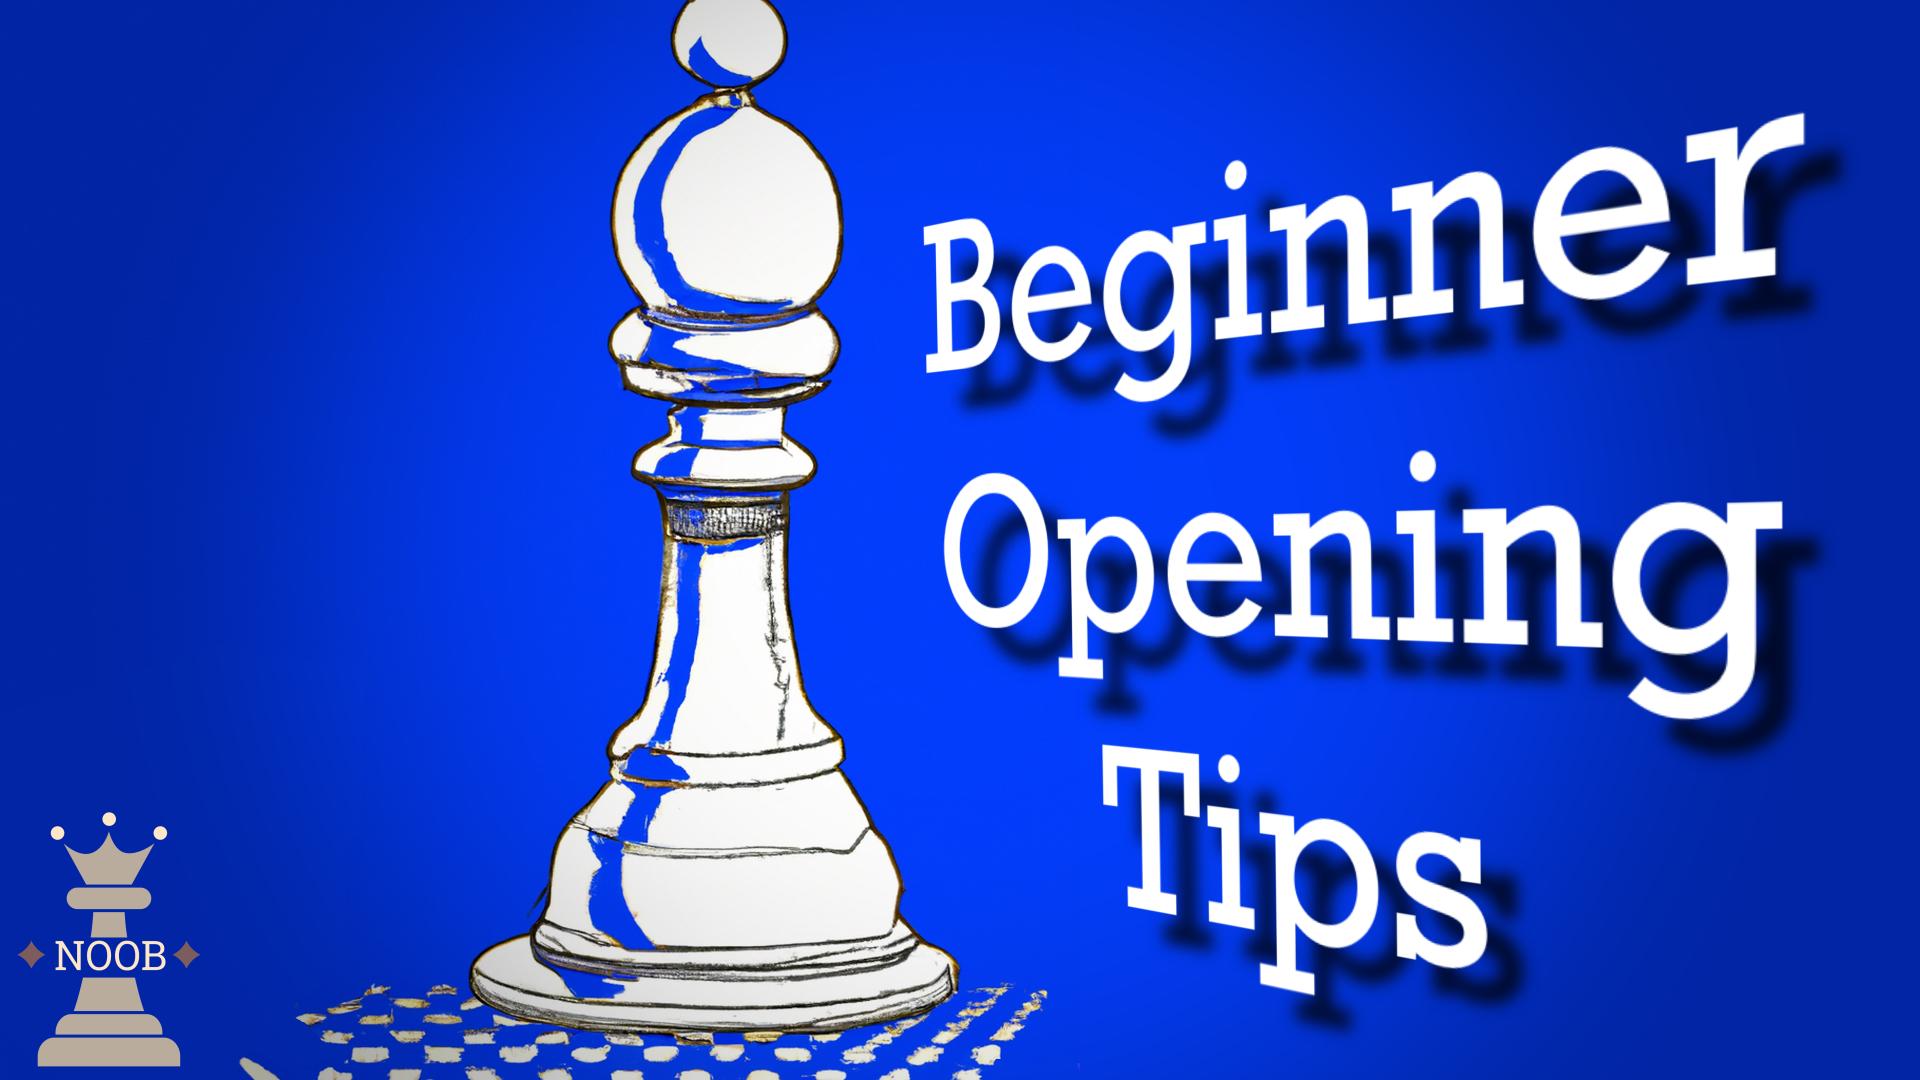 Chess Basics: Opening Principles 